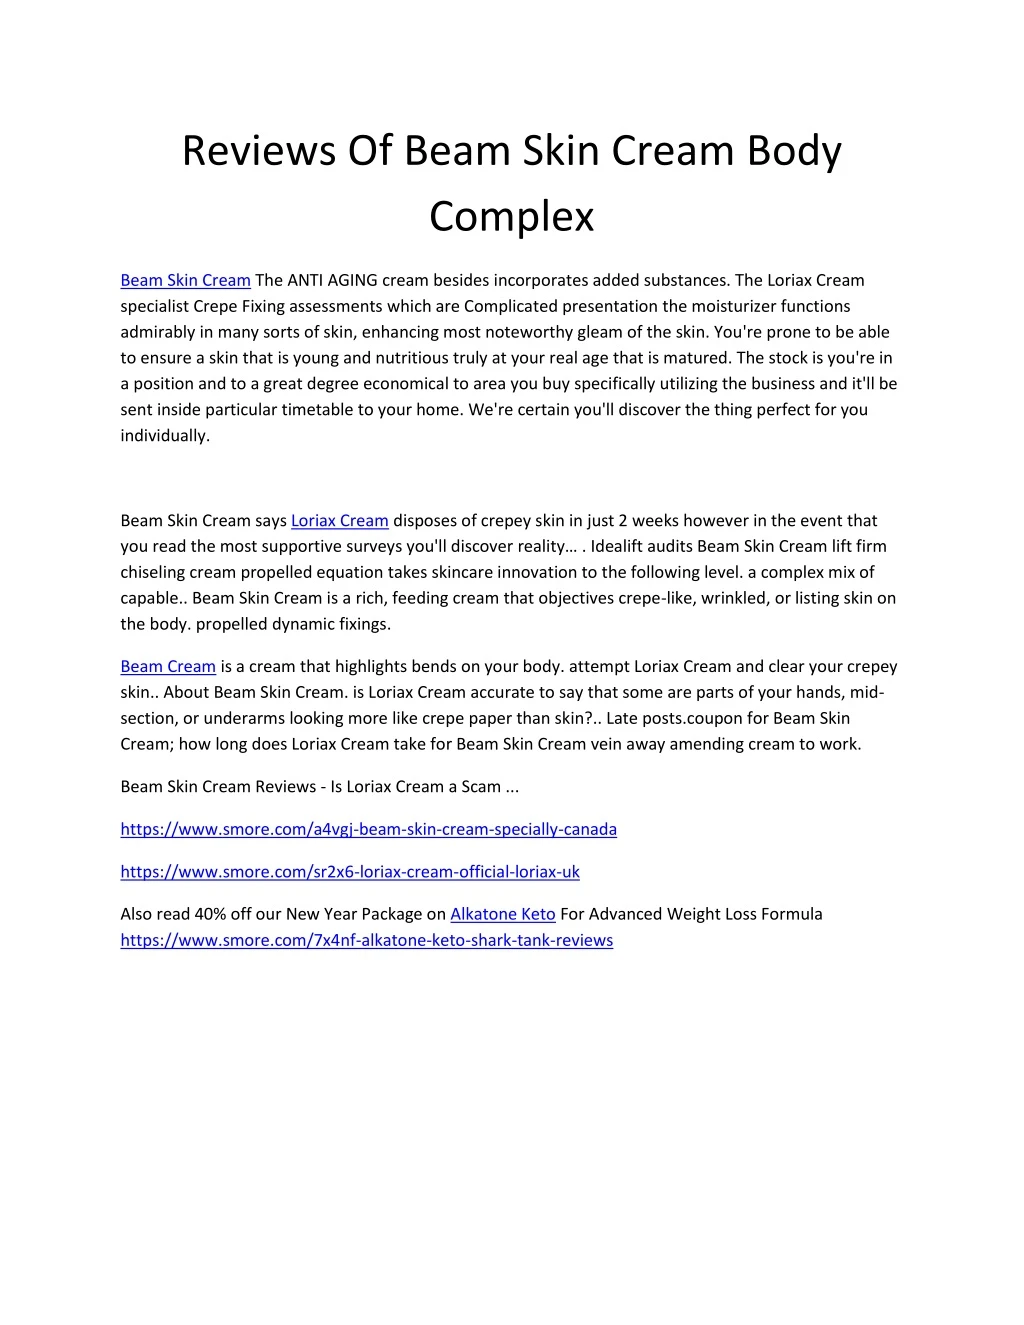 reviews of beam skin cream body complex